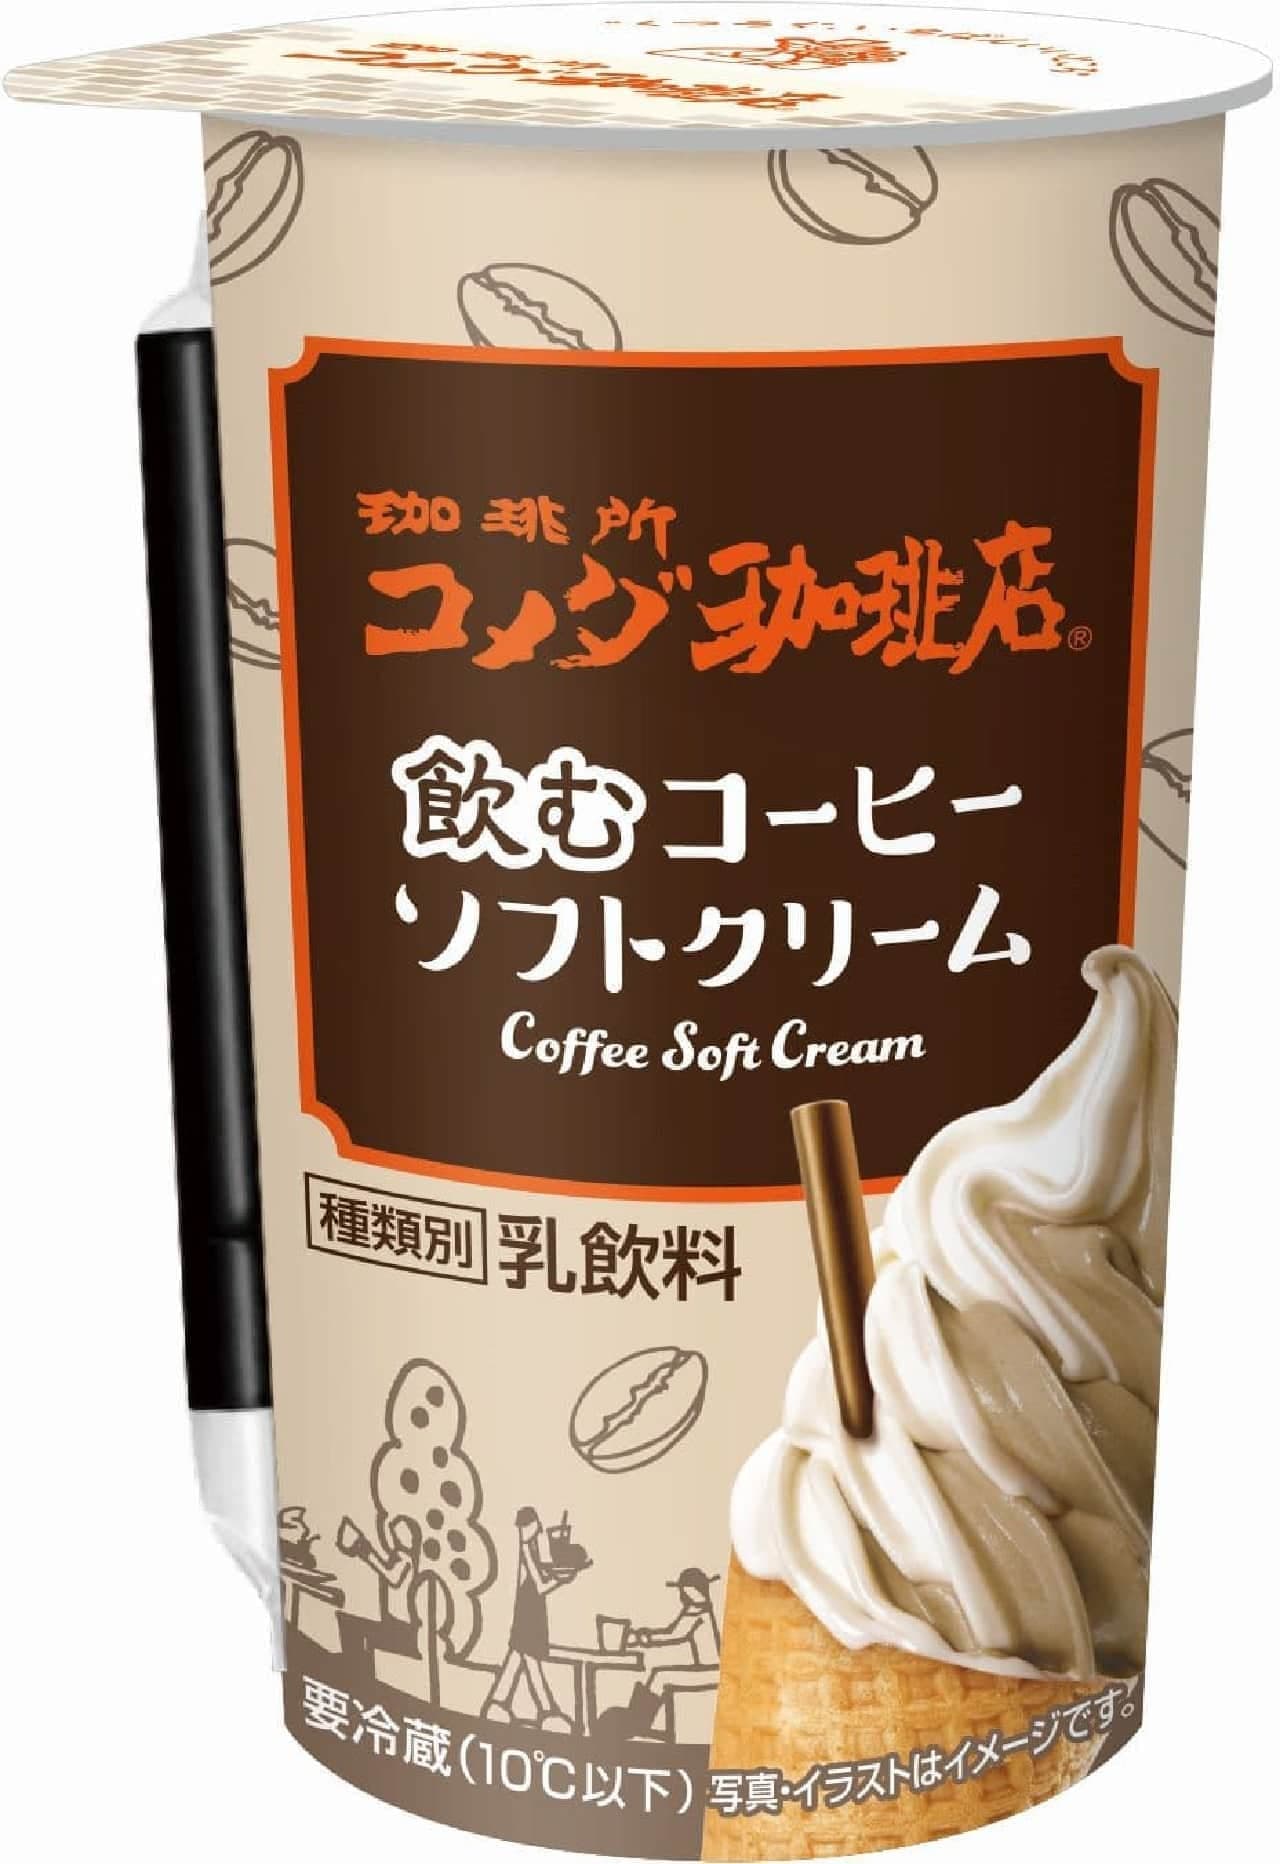 Coffee Shop Komeda Coffee Shop Drinking Coffee Soft Serve" from Toyo Beverage.